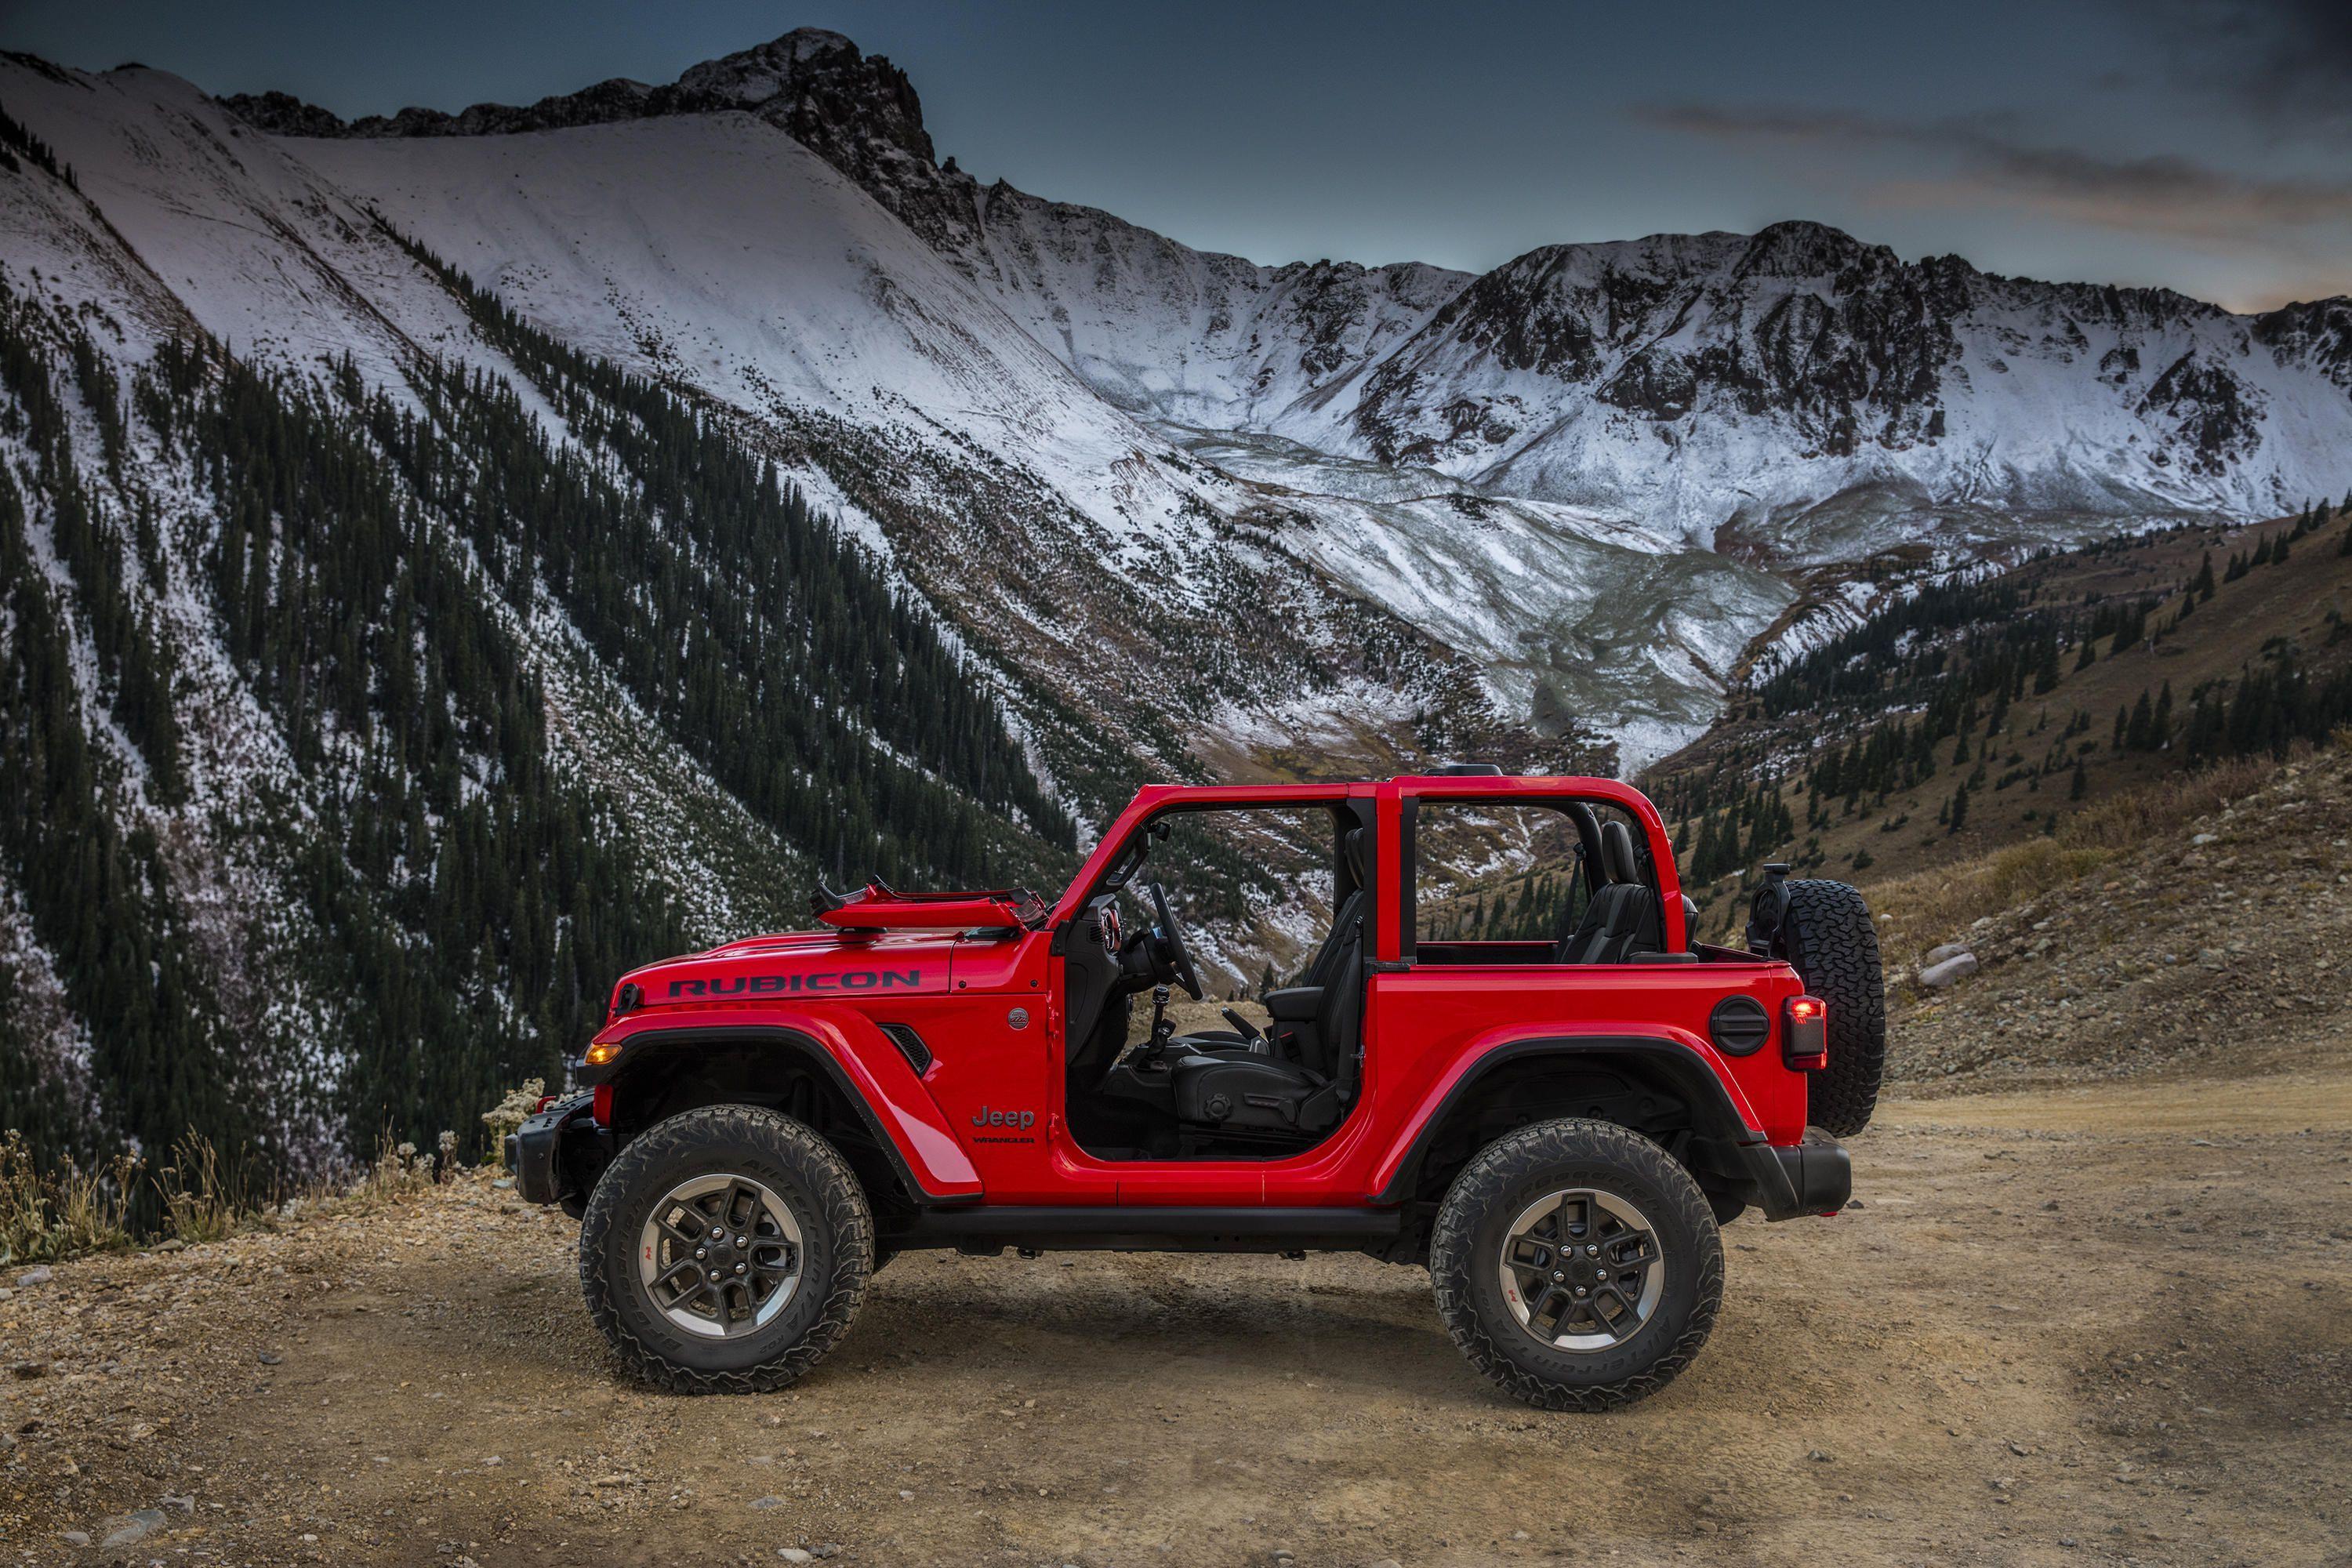 Jeep Wrangler 2018: Here Are Brand New Photo